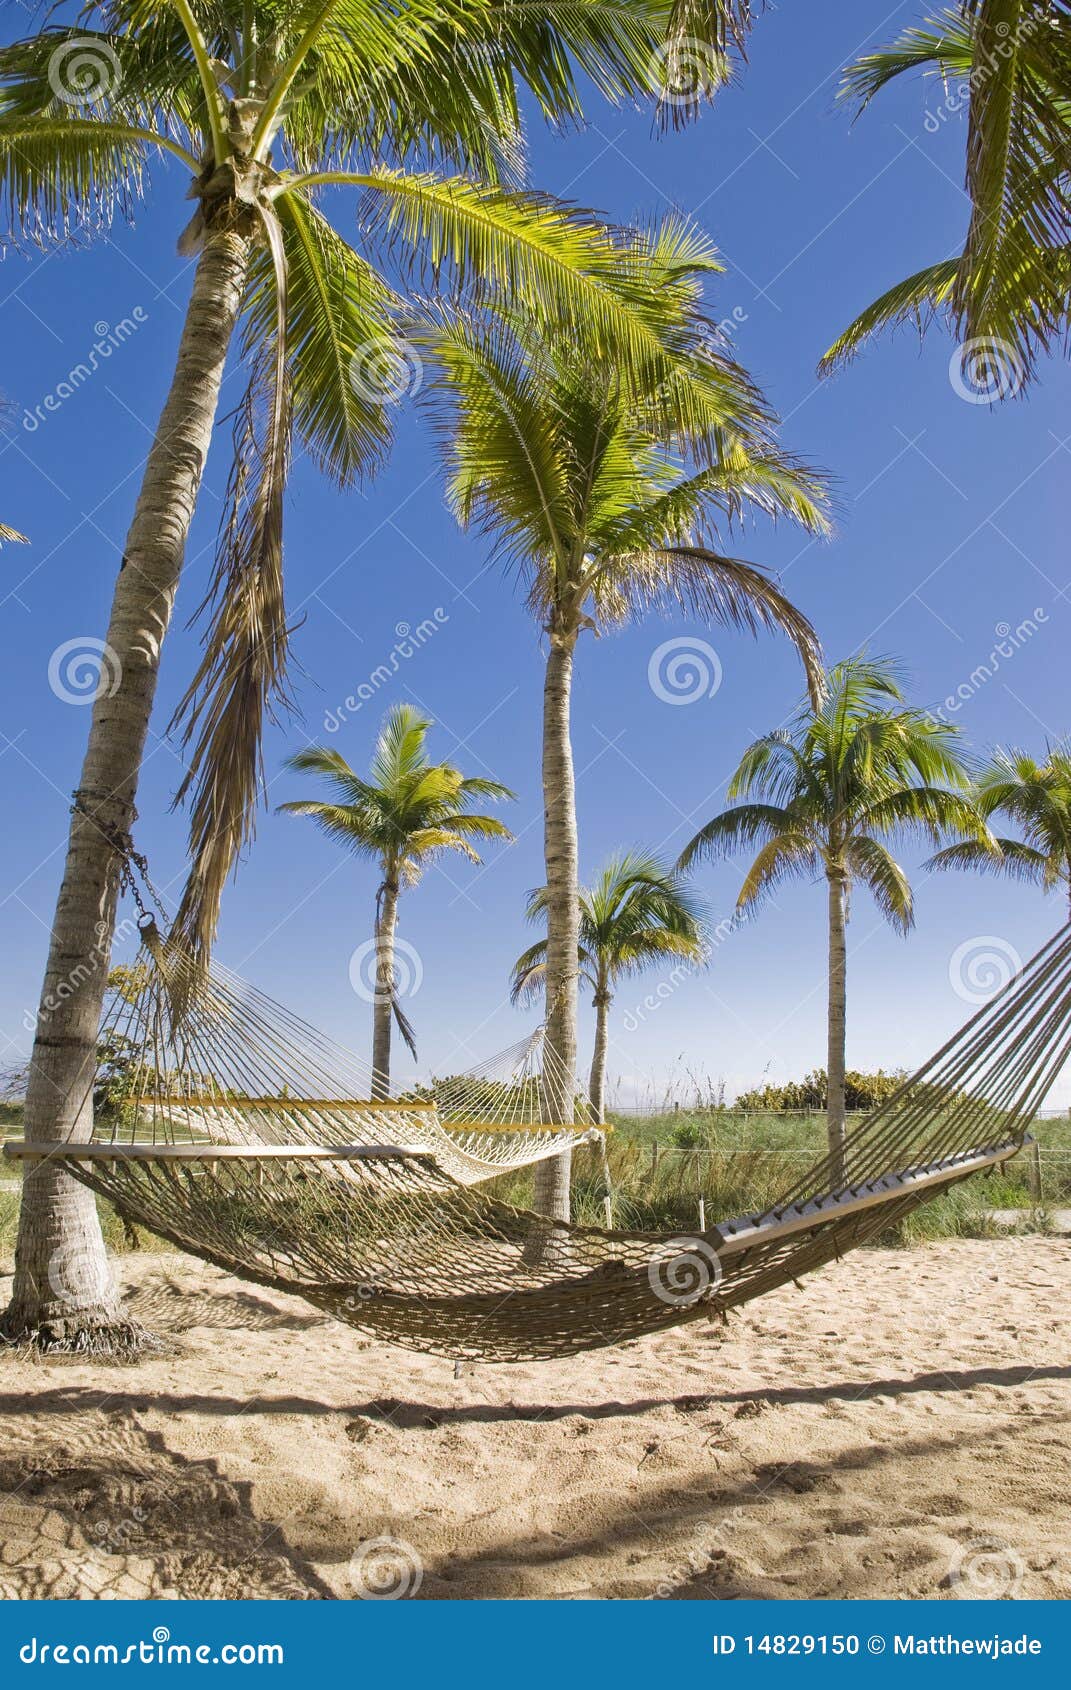 hammocks in a tropical paradise